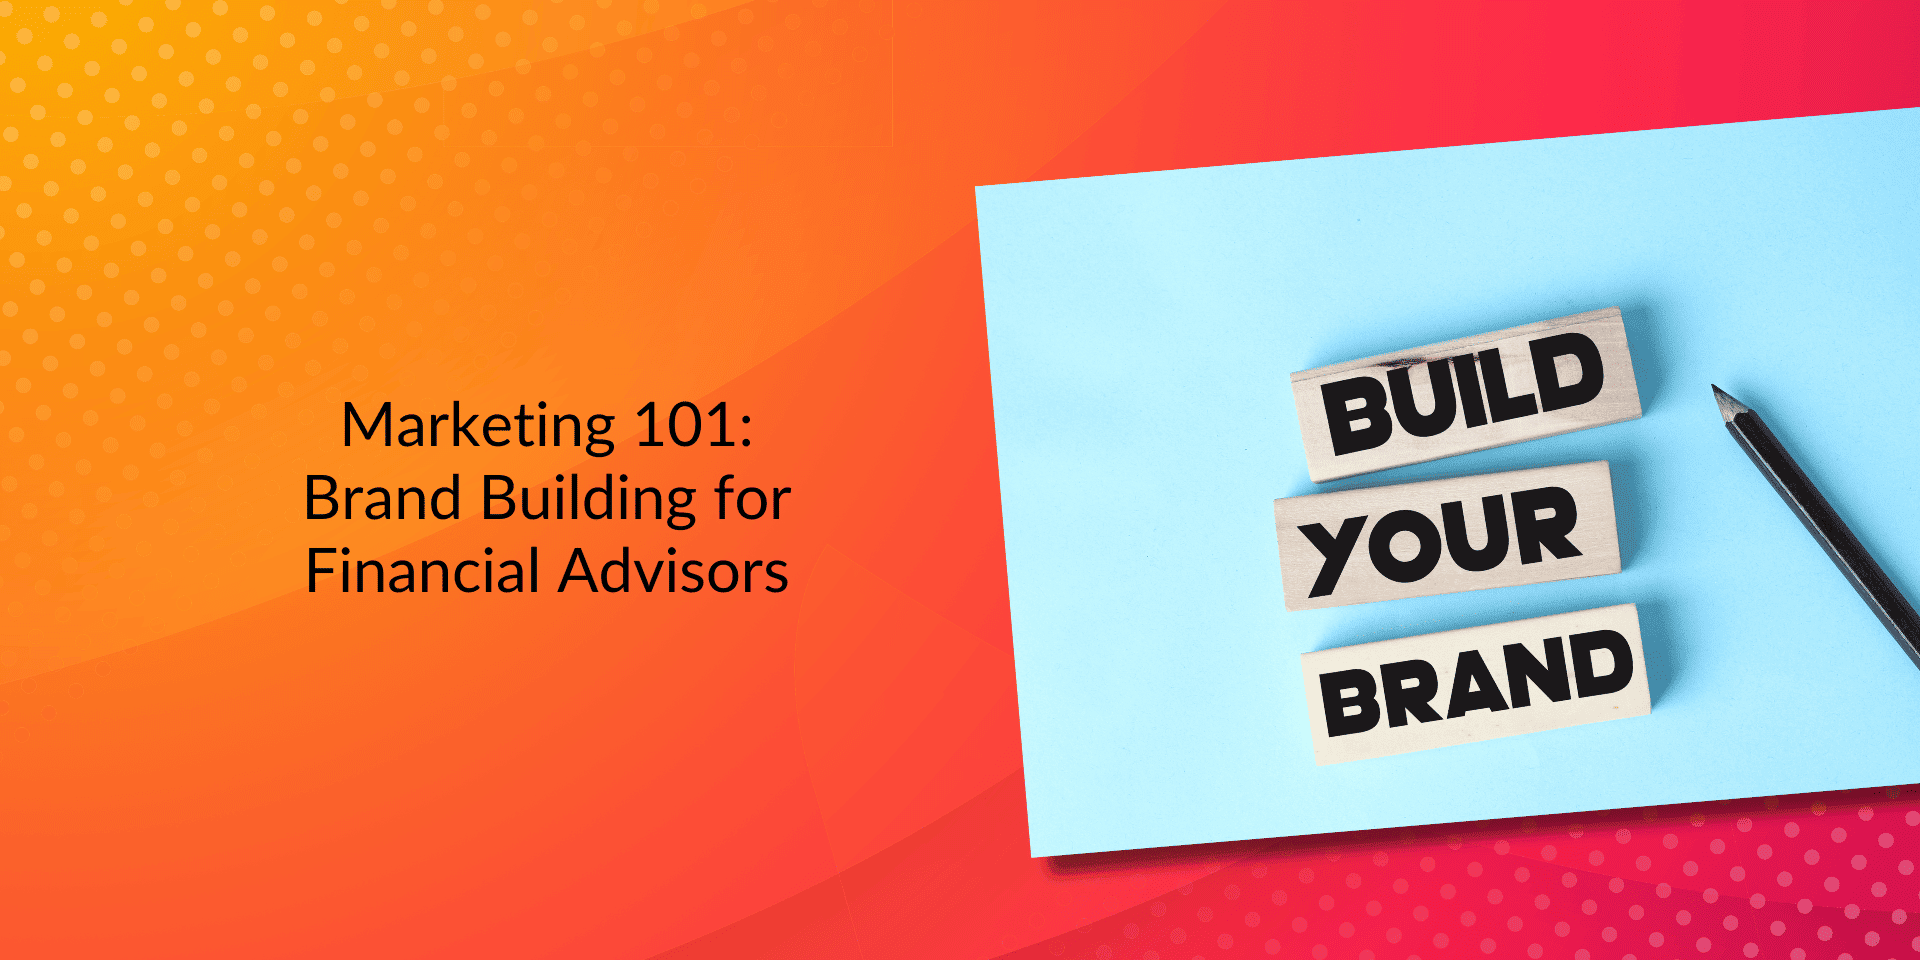 Marketing 101: Brand Building for Financial Advisors